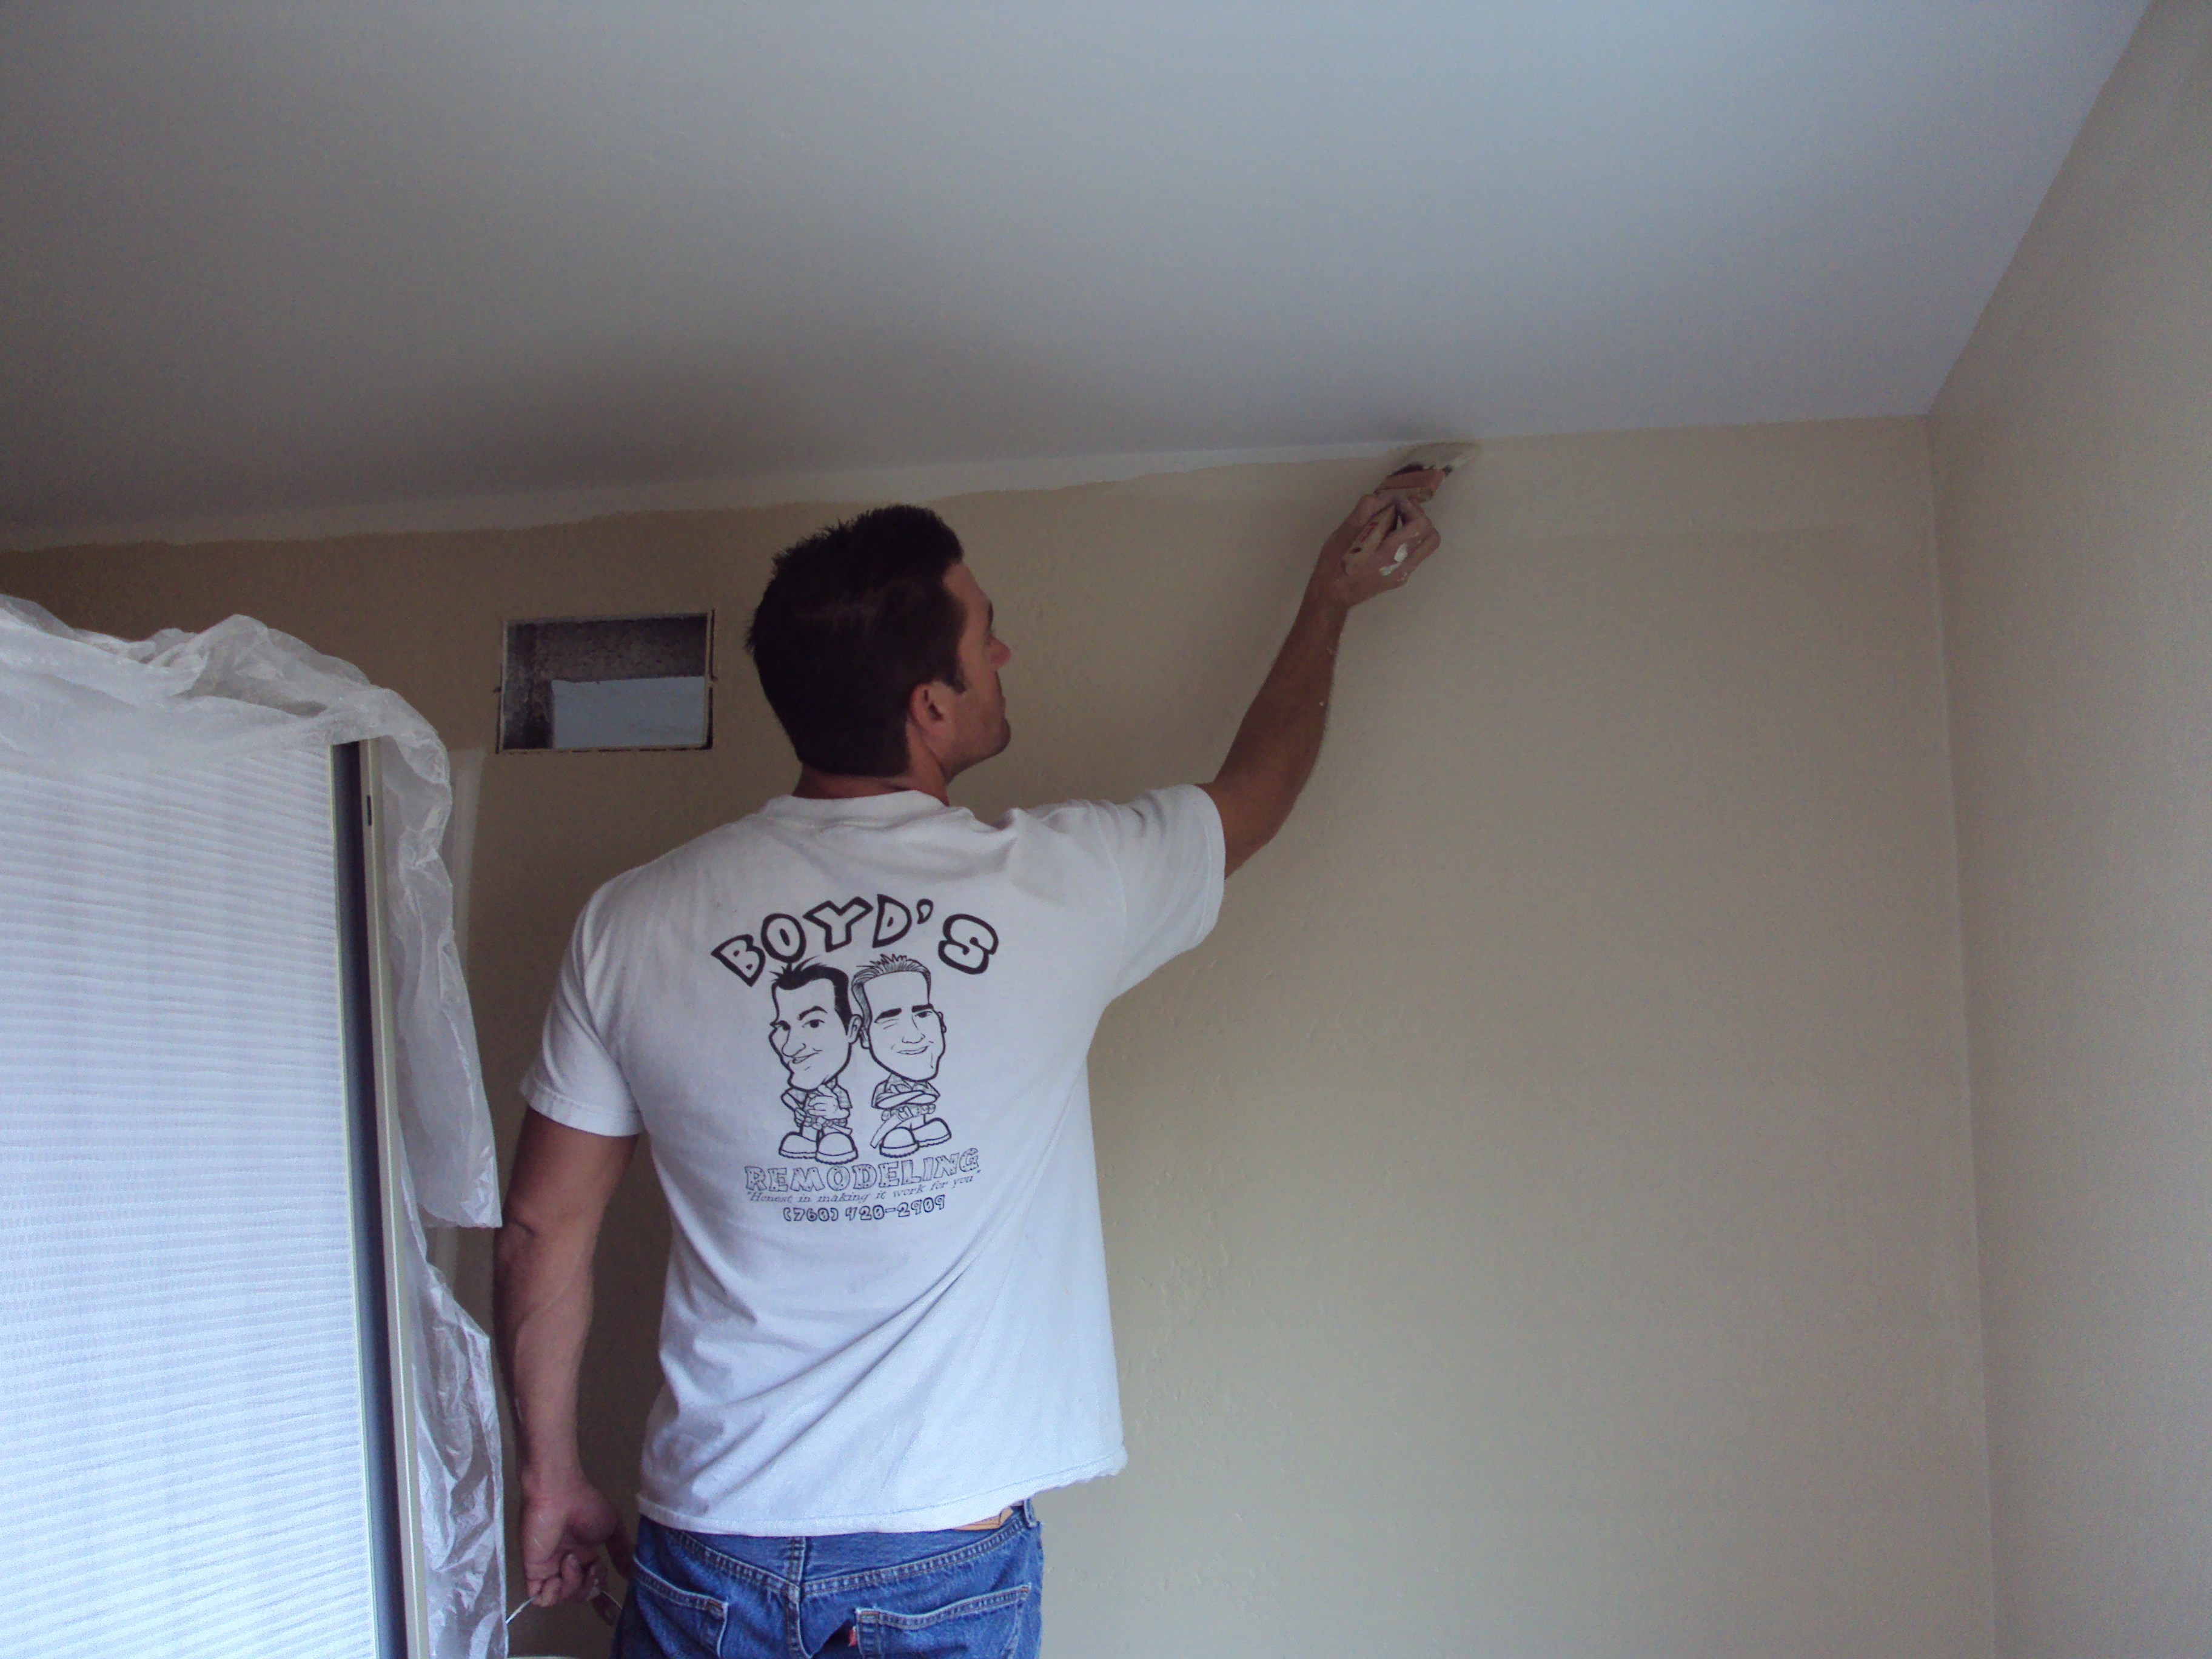 Wallpaper Removal San Diego Drywall Repair 